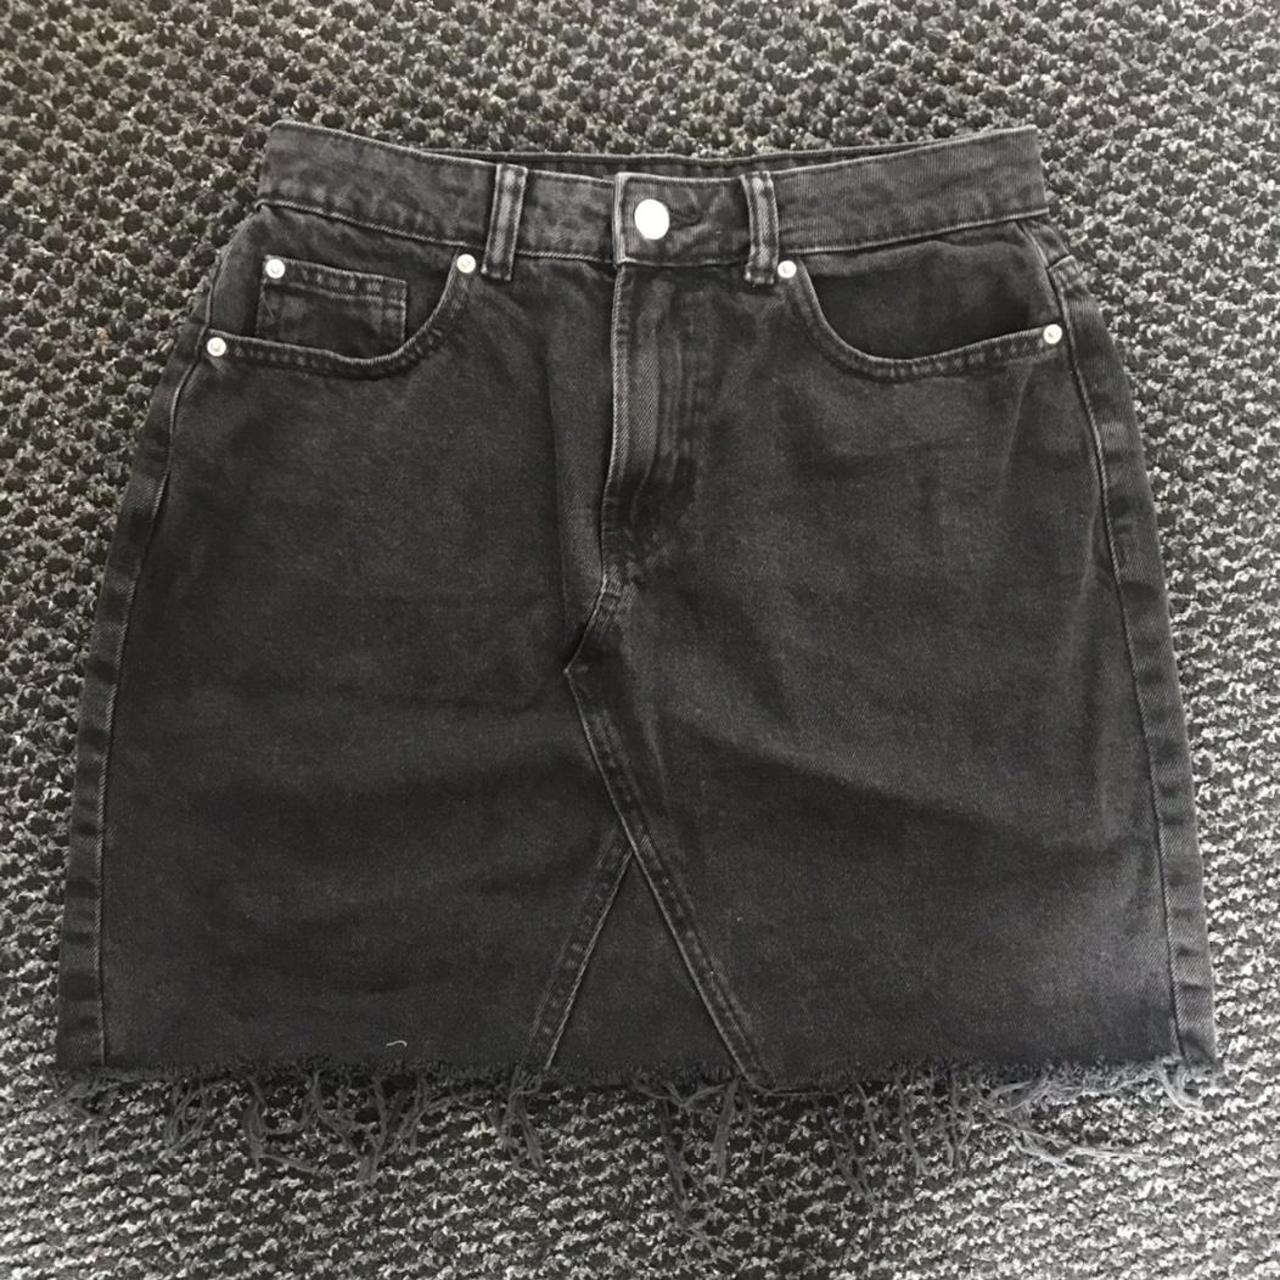 Black charcoal denim mini skirt, perfect condition 🖤 - Depop